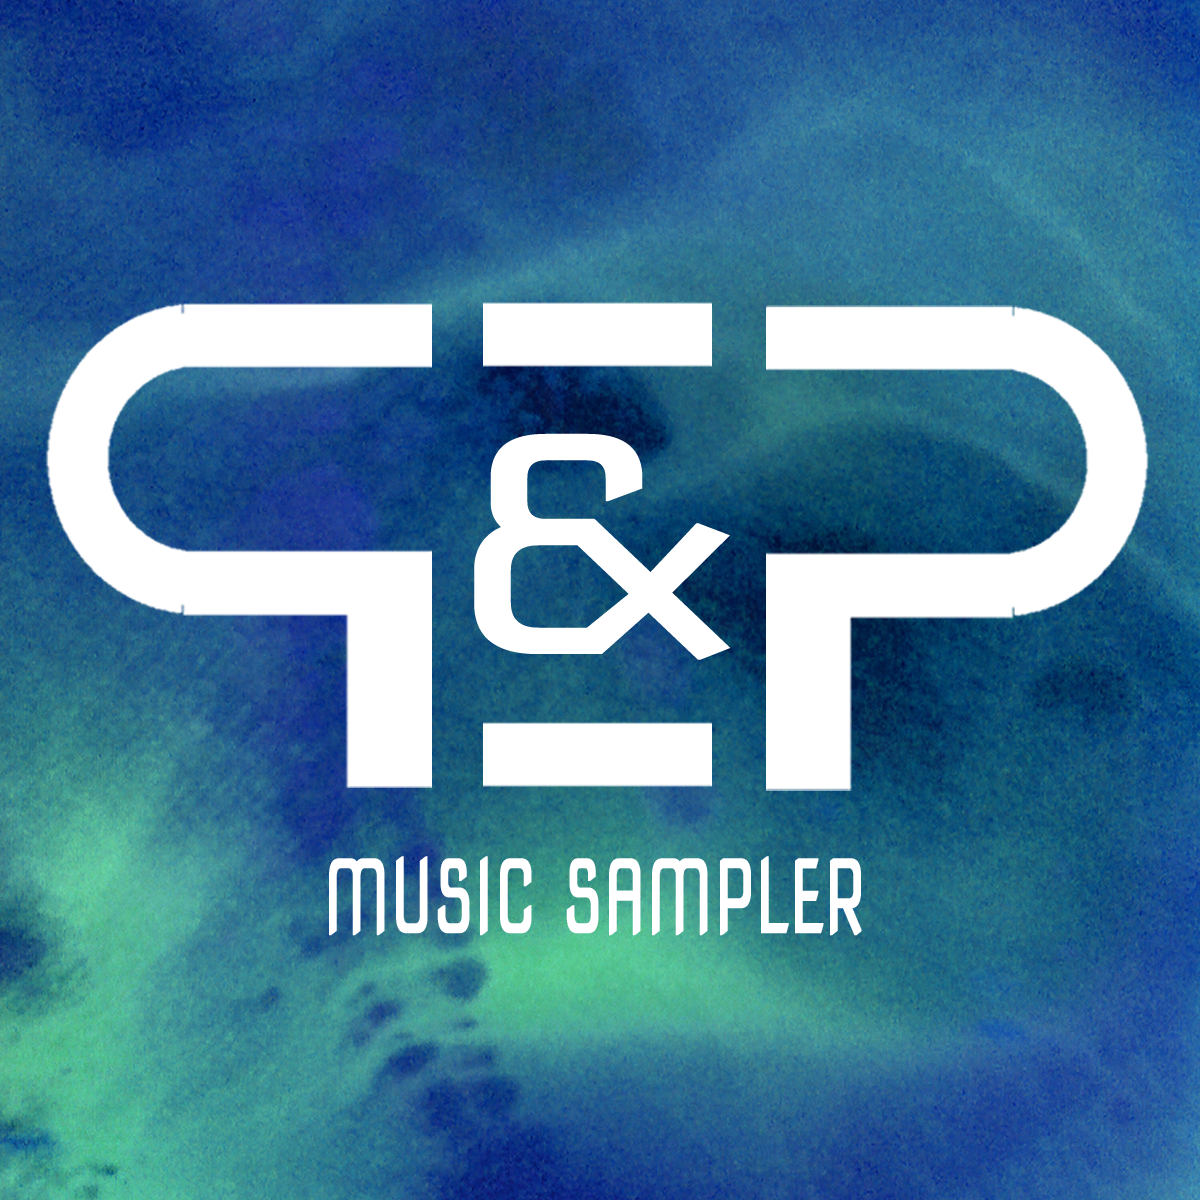 P&P Music - Sampler (2009-2018) - PredWilM! Project